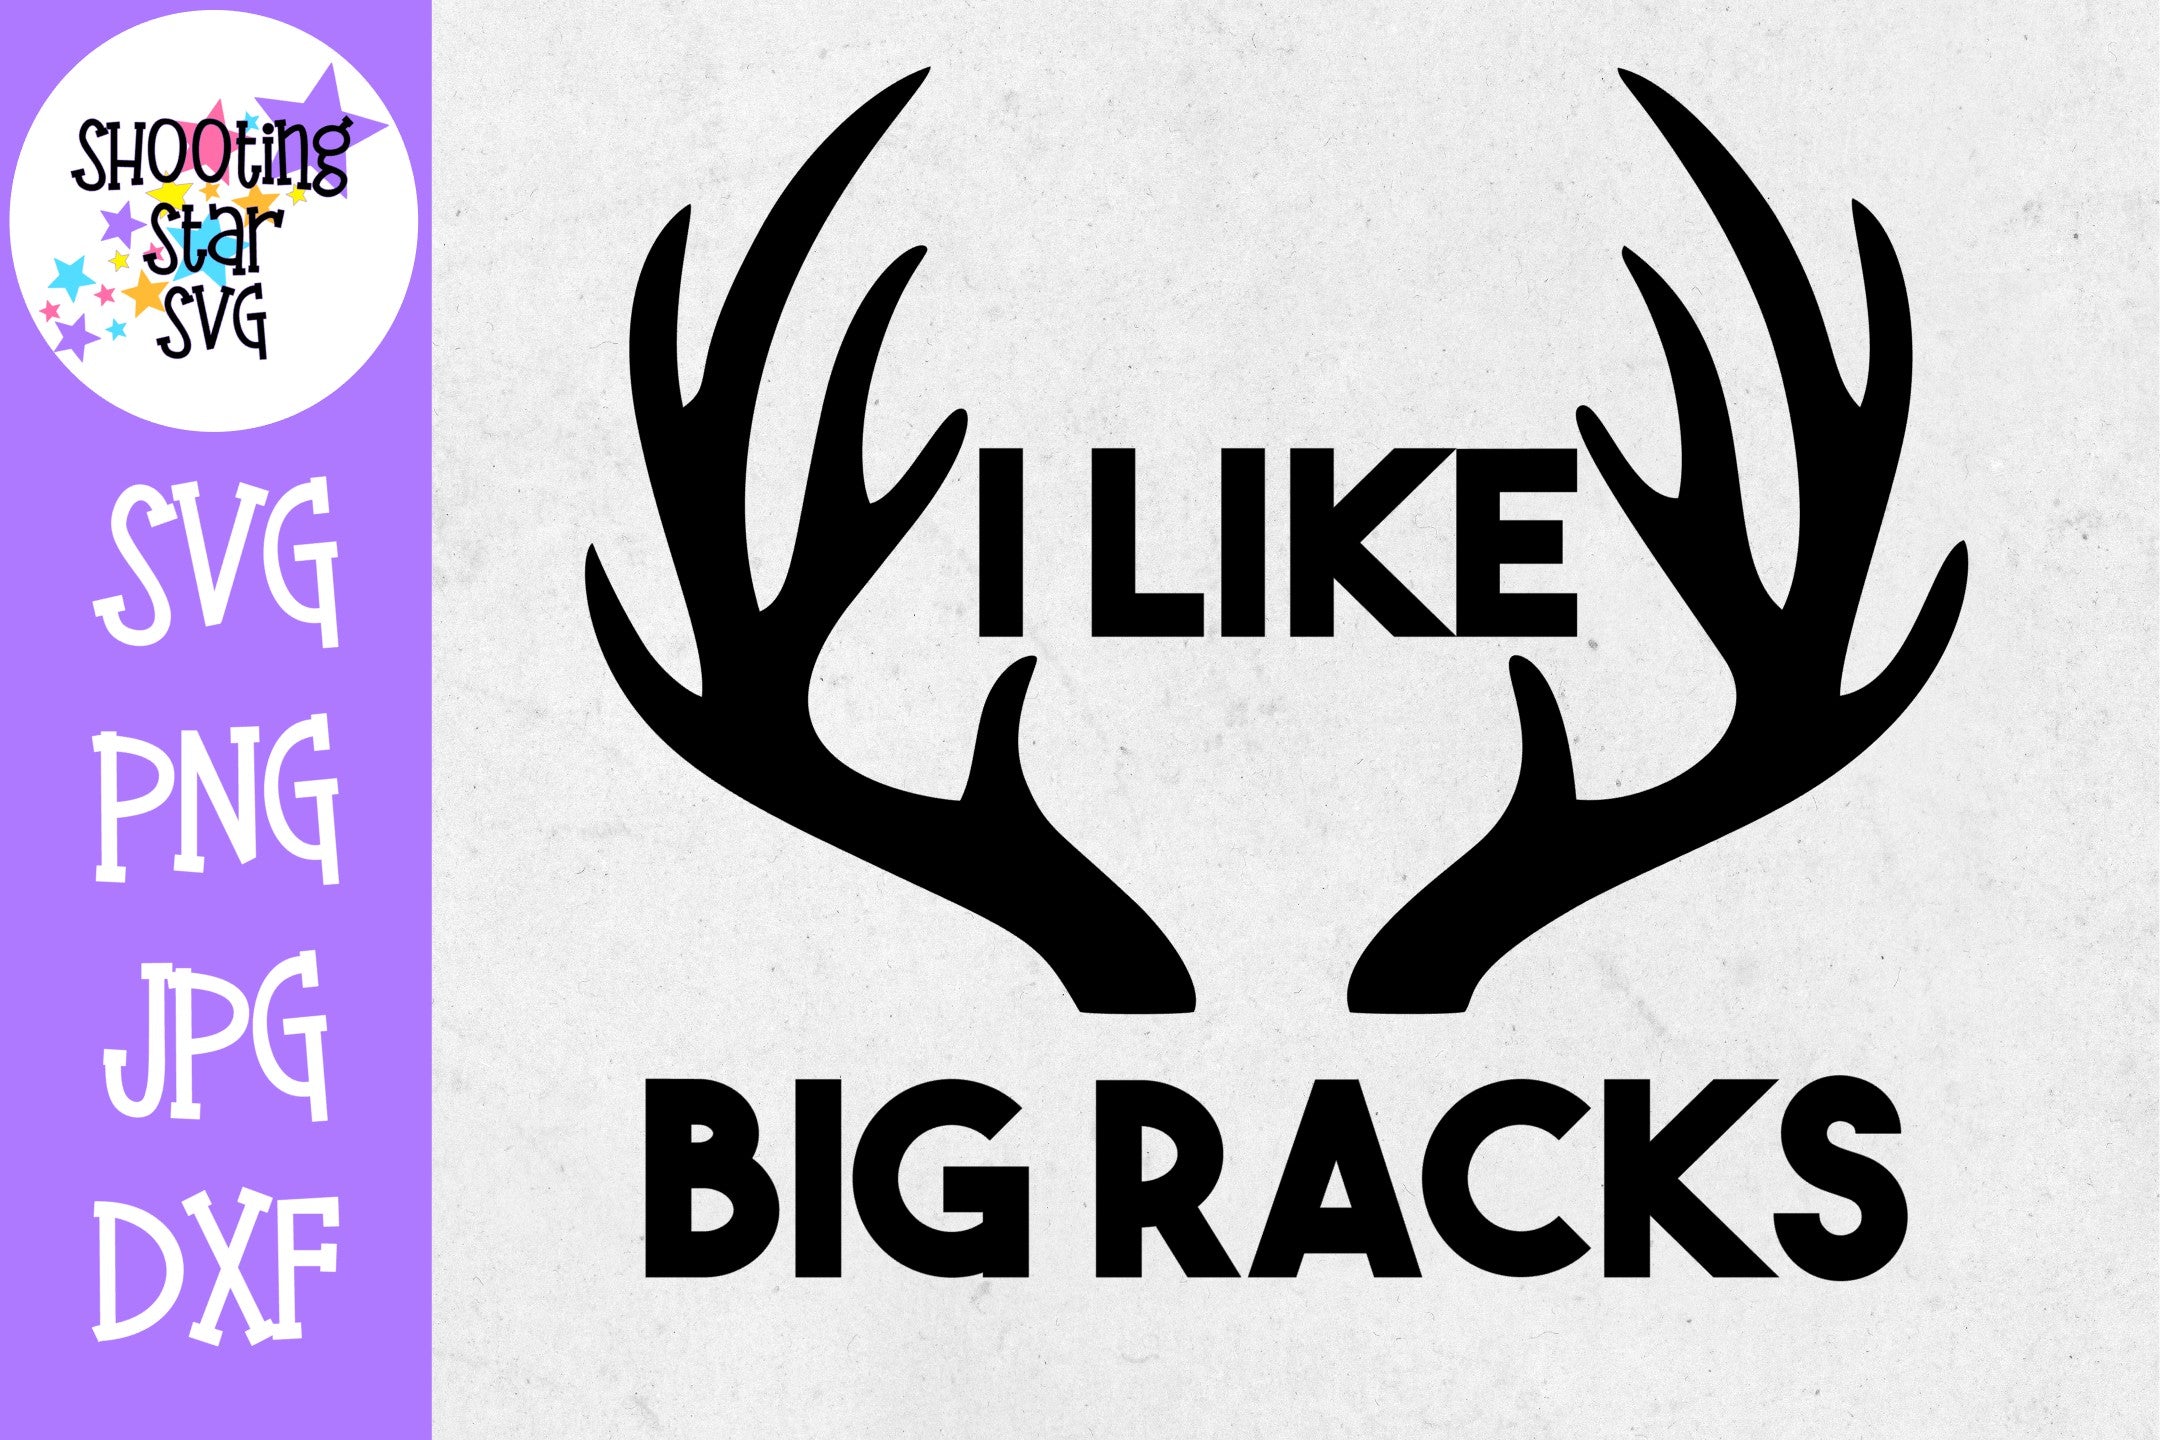 I like big racks svg -Father's Day SVG - Hunting SVG